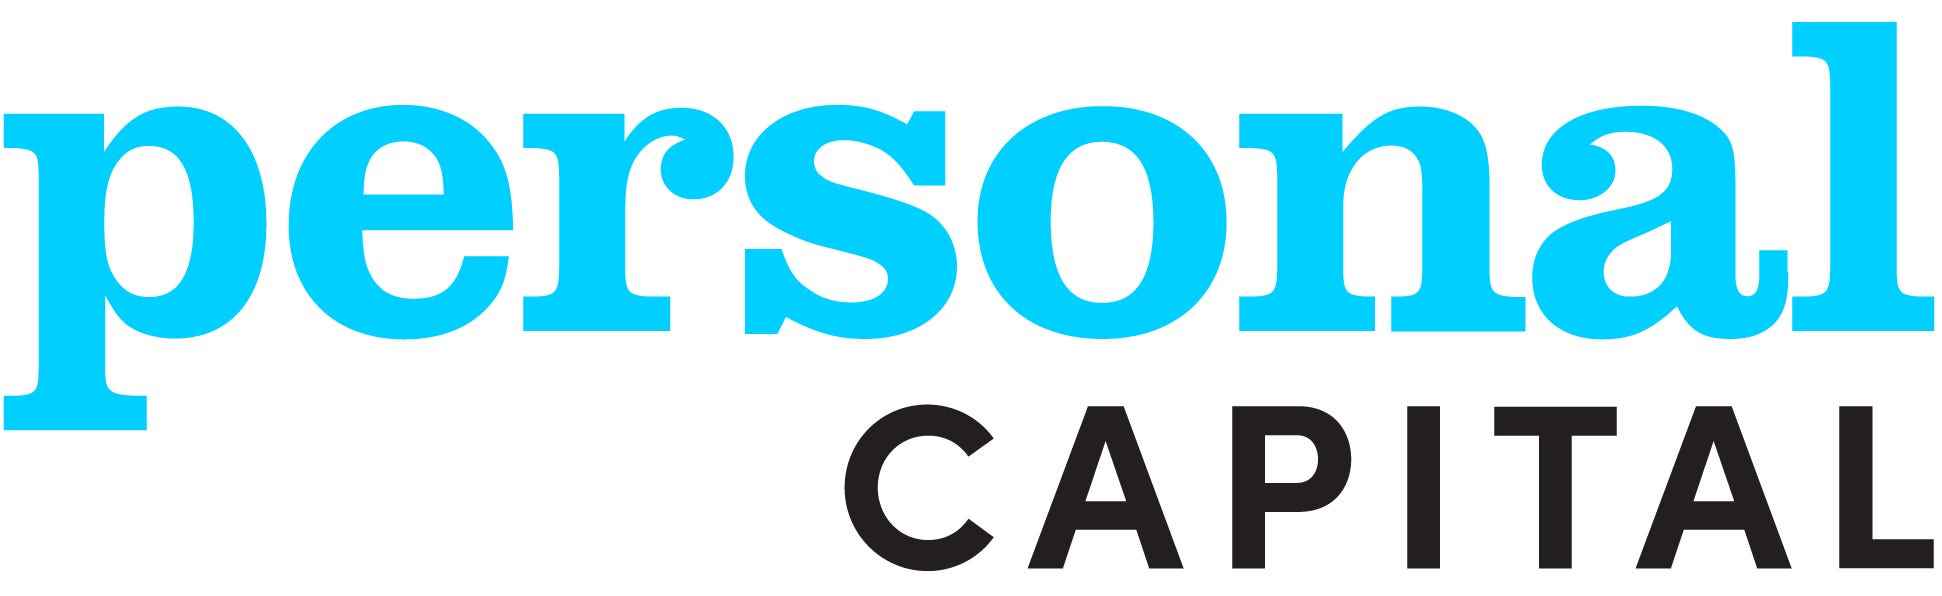 Personal Capital-Logo für Personal Finance Insider